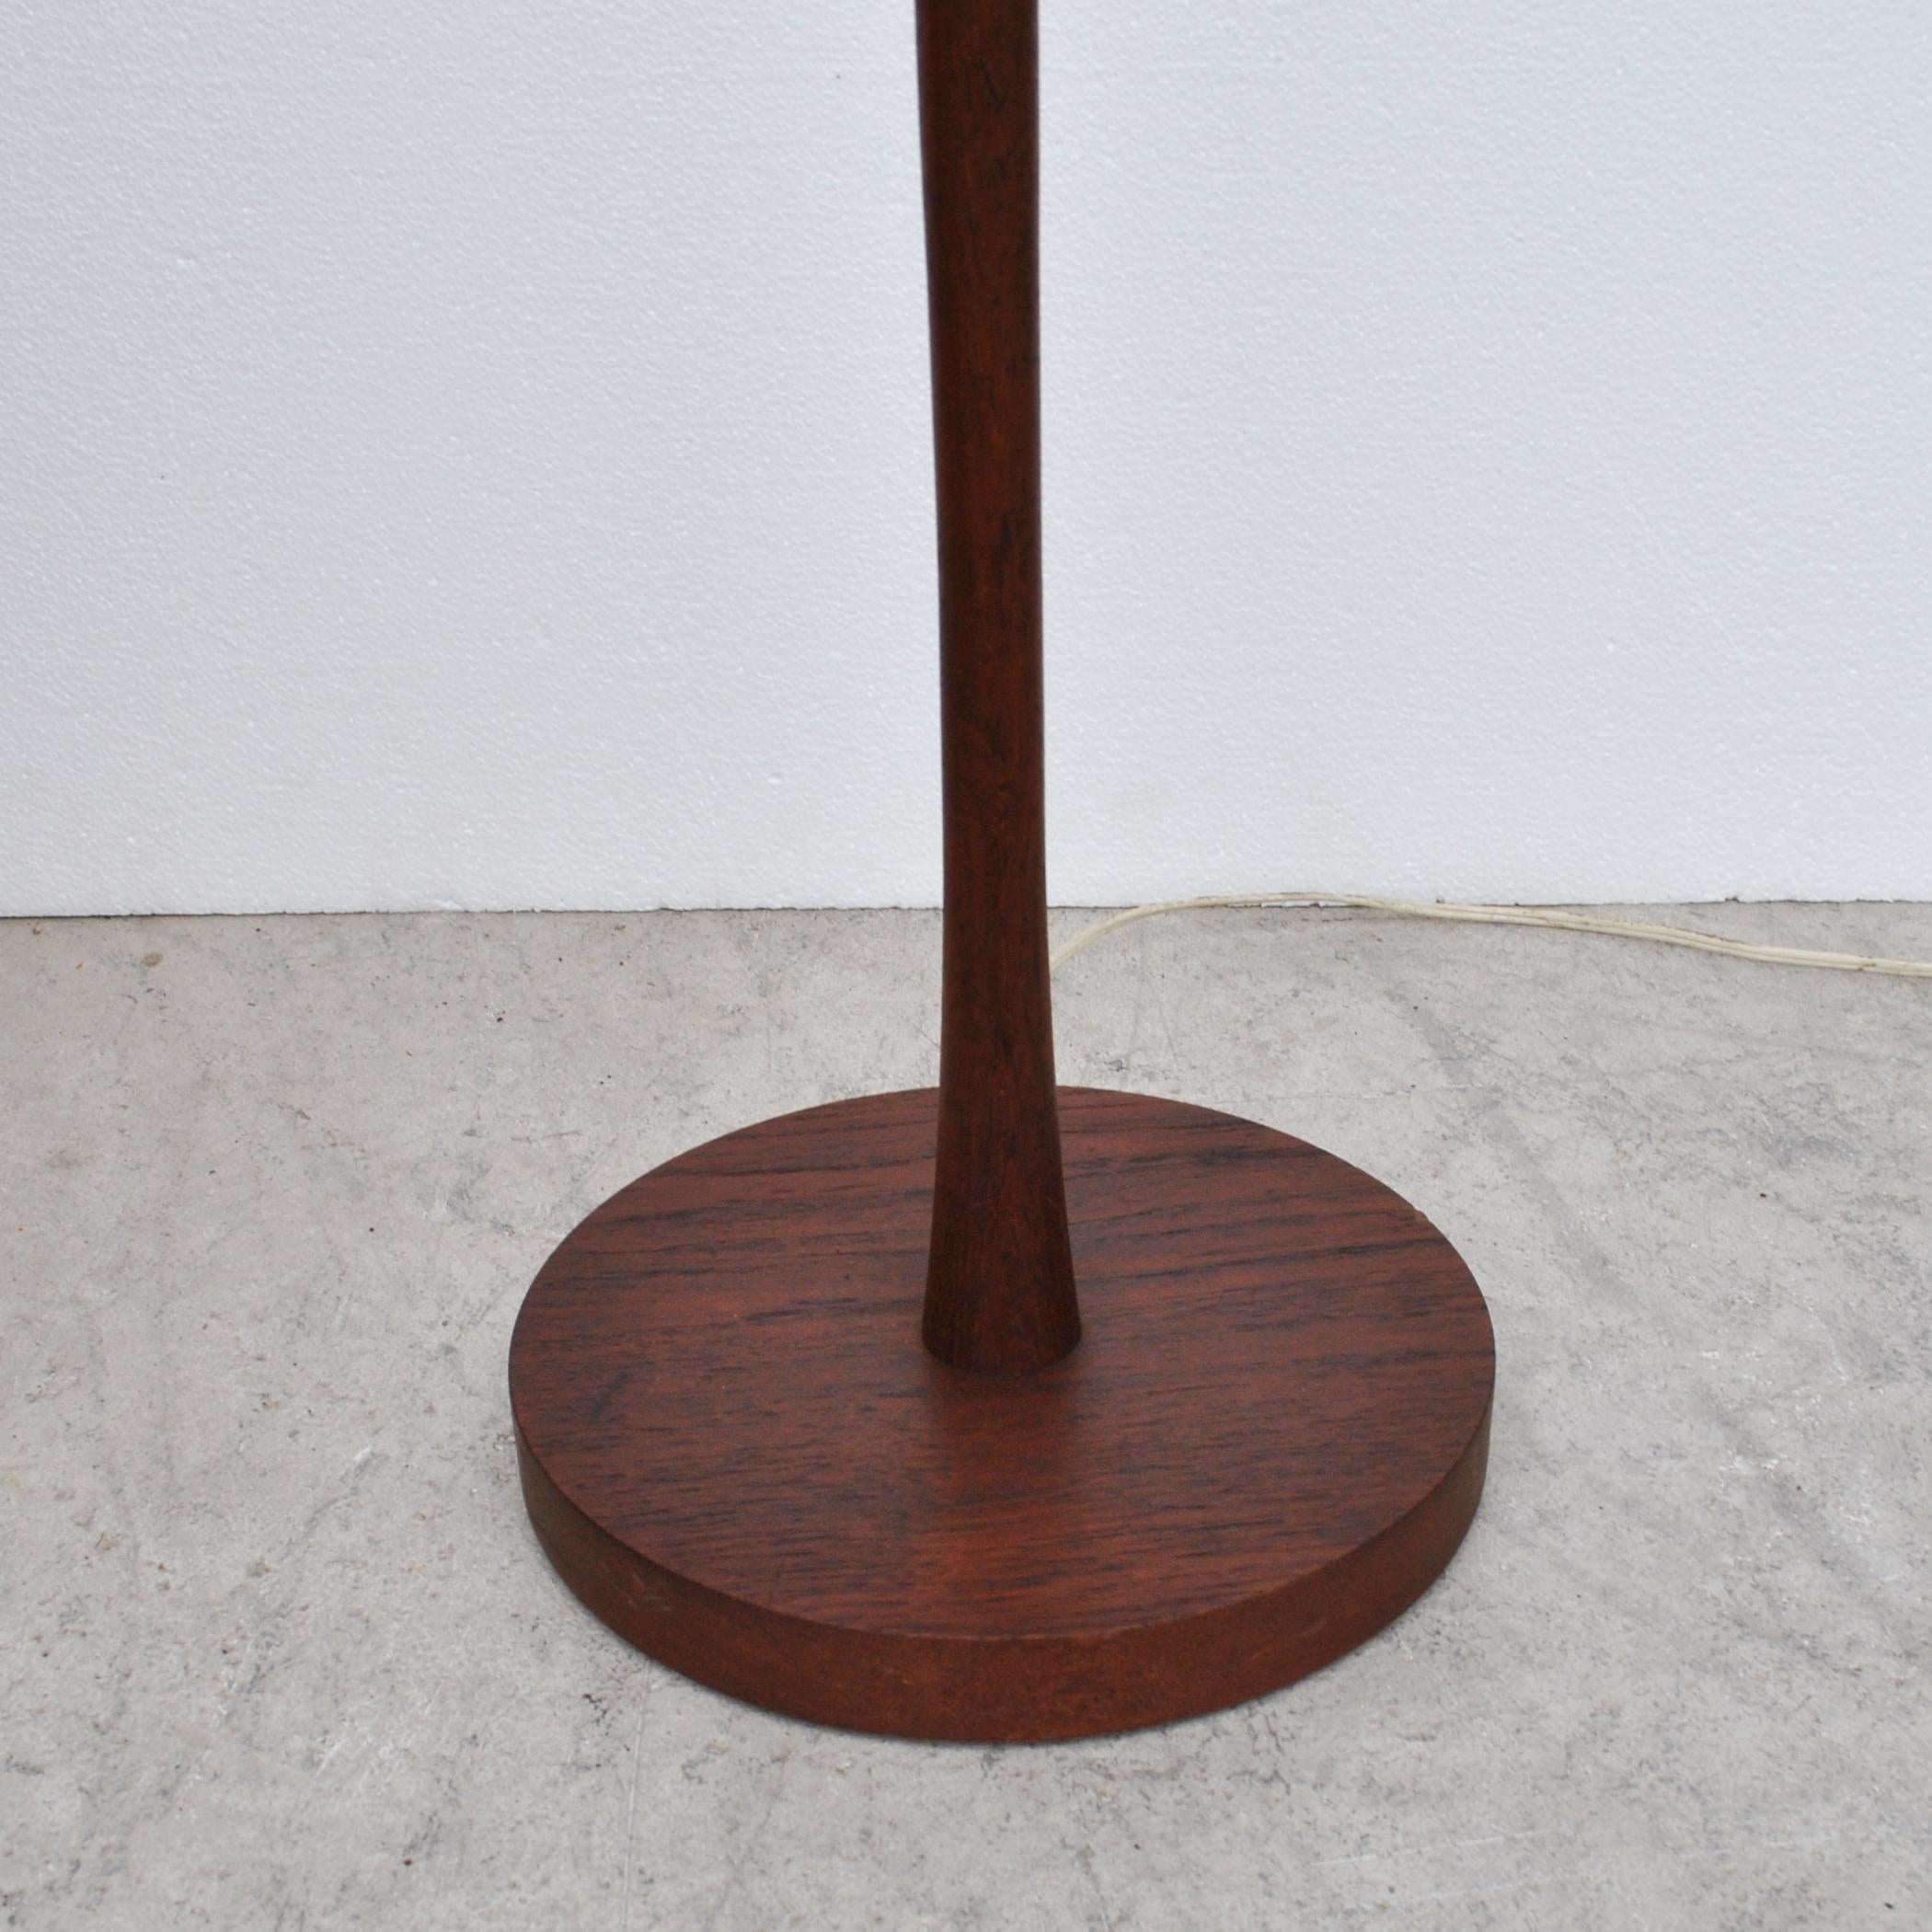 A mid century modern teak floor lamp made in Sweden by Dux.